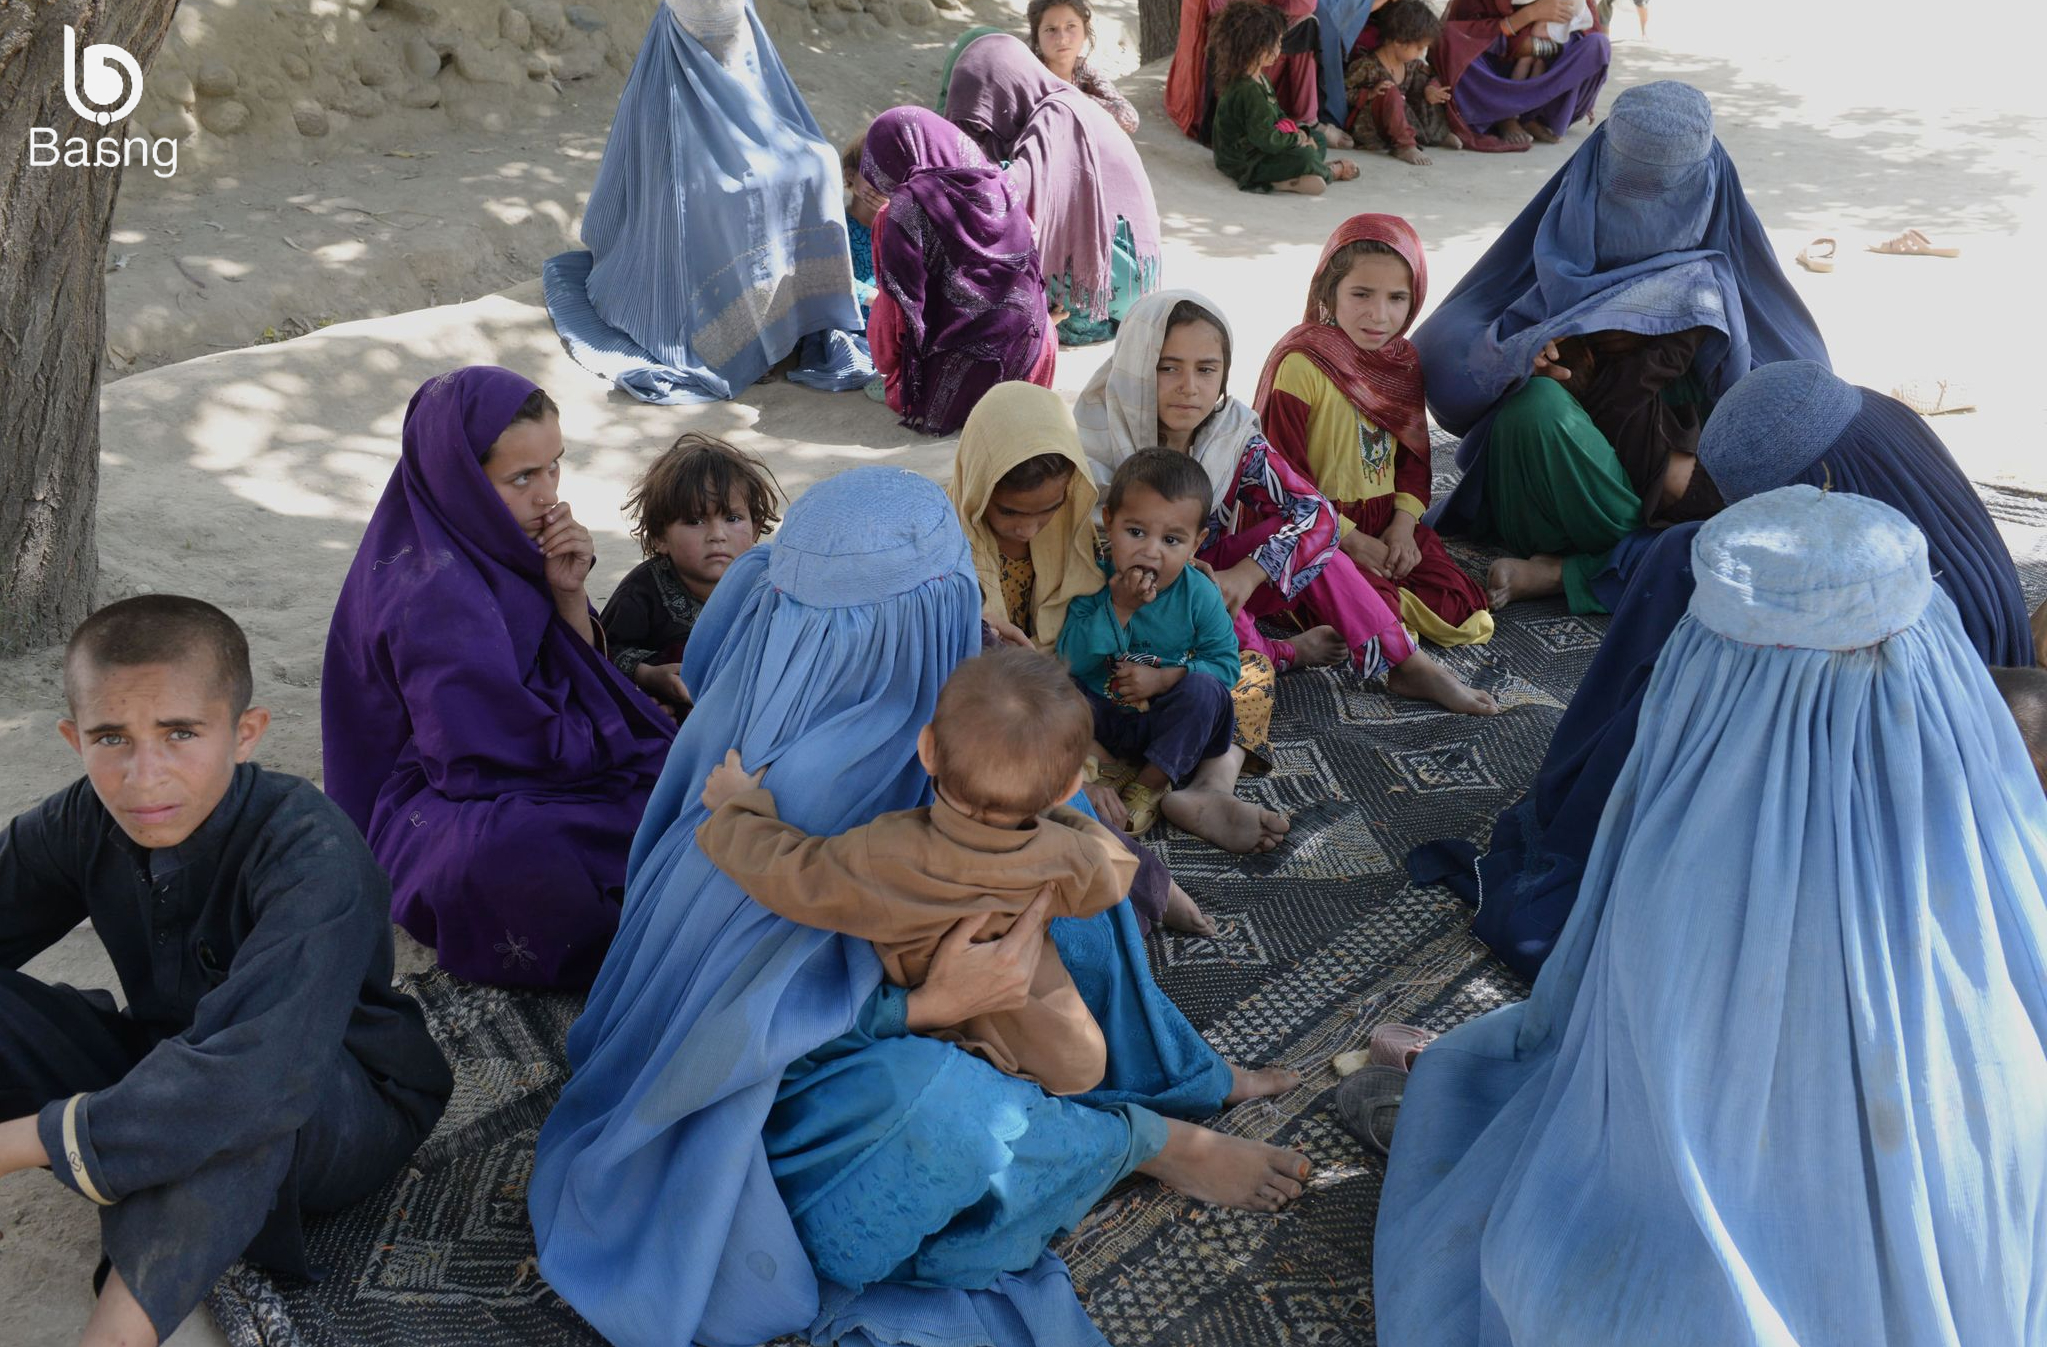  US: Taliban facilitators of human trafficking in Afghanistan